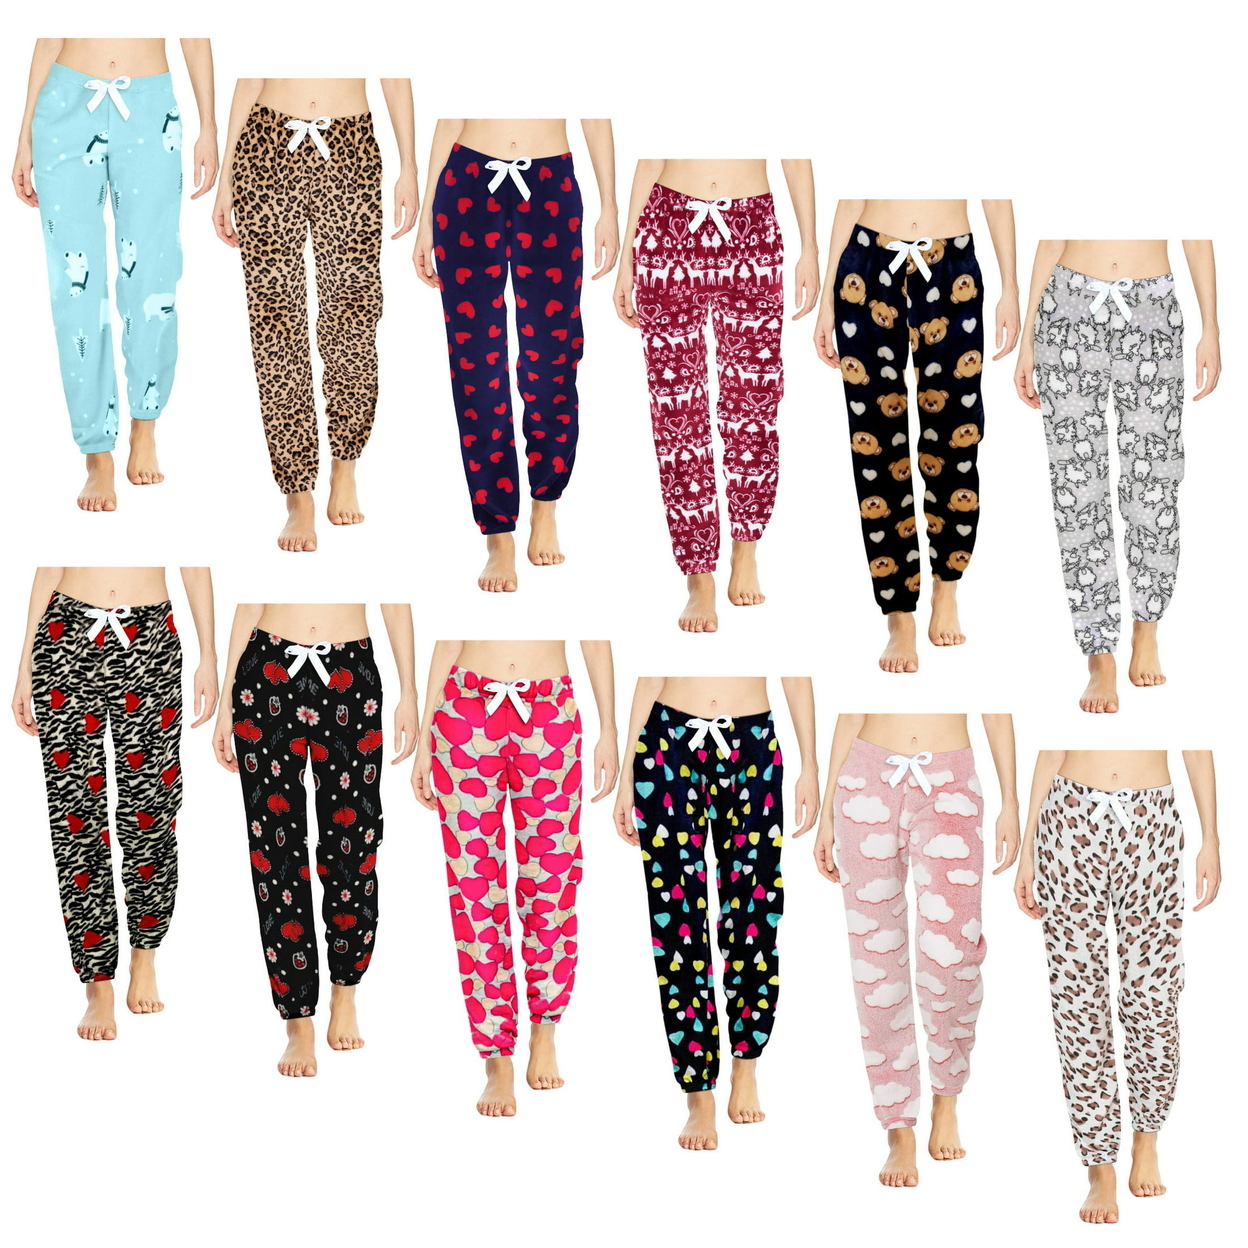 3-Pack: Women's Printed Ultra-Soft Comfy Stretch Micro-Fleece Pajama Lounge Pants - Large, Love